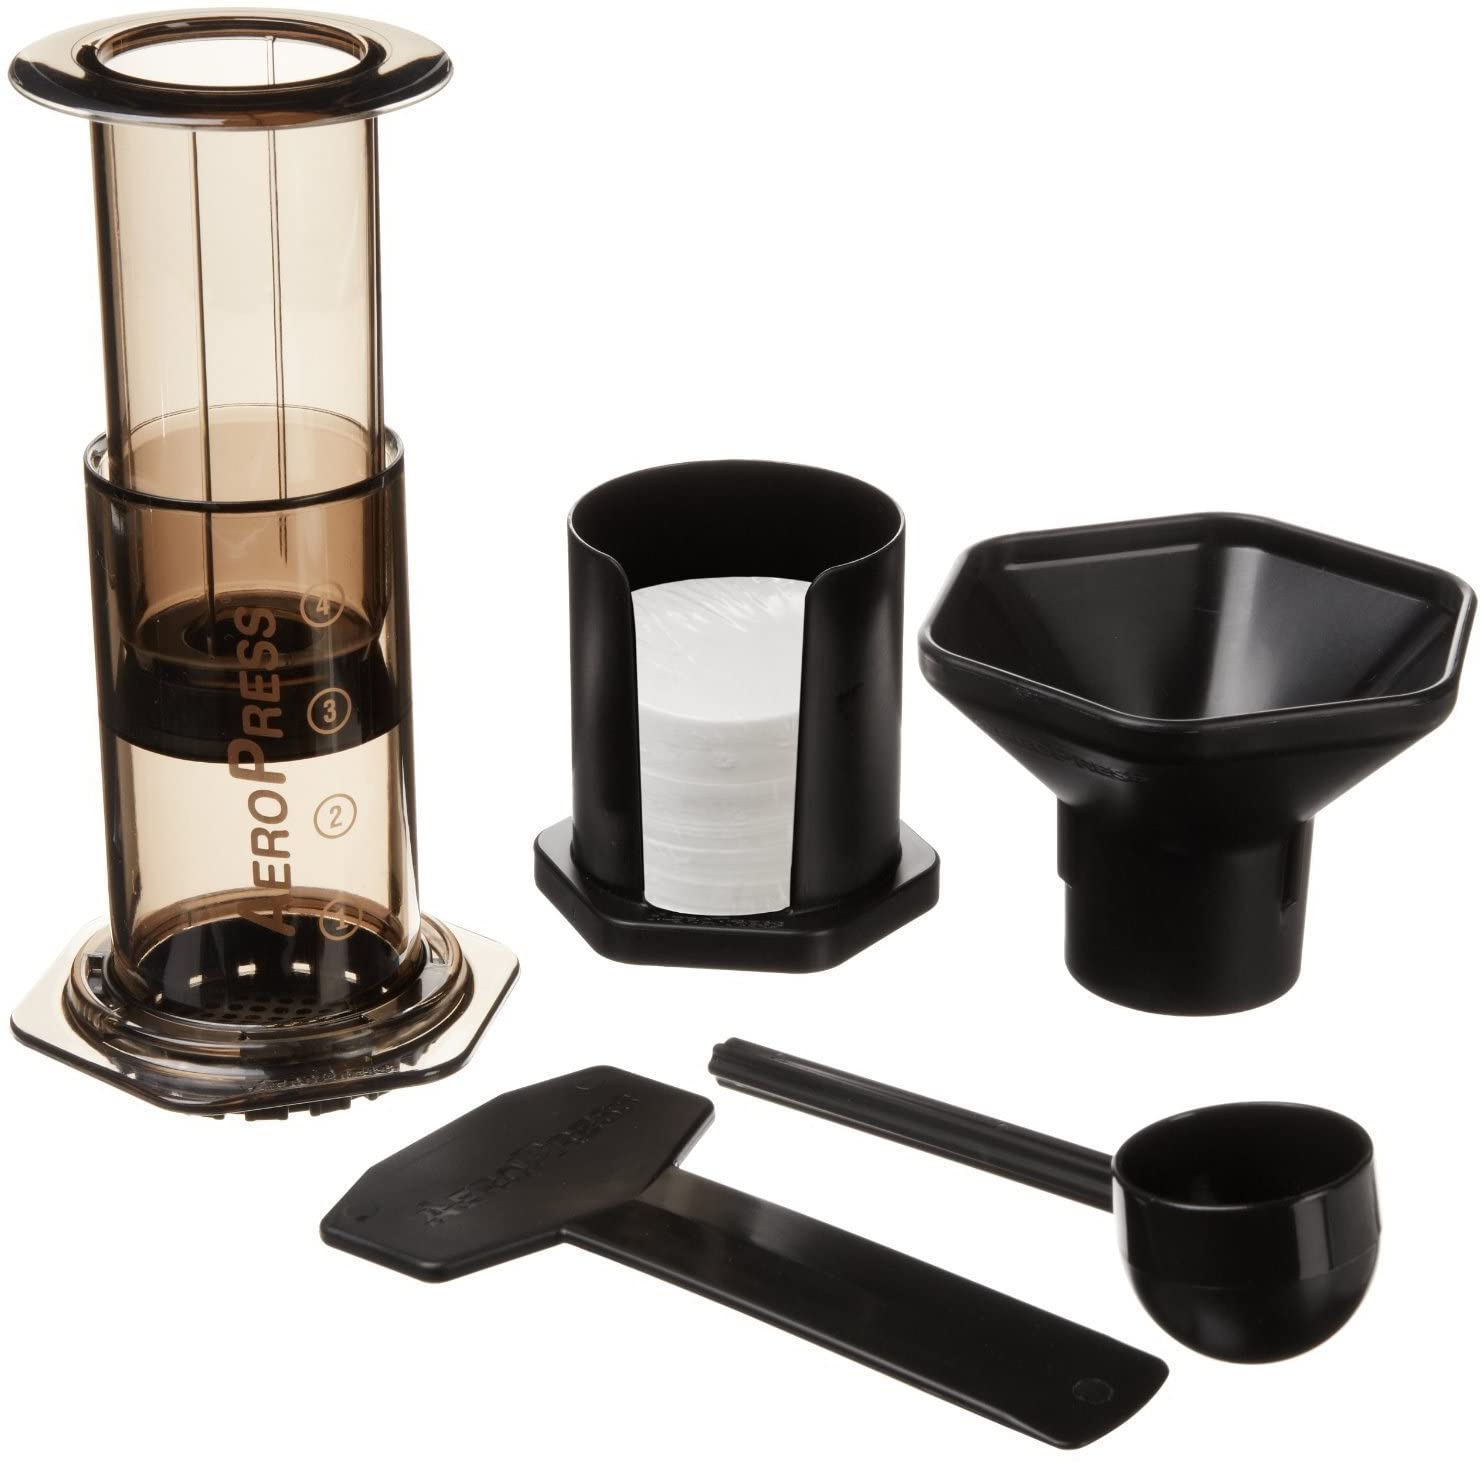 AeroPress Coffee and Espresso Maker — manual and portable